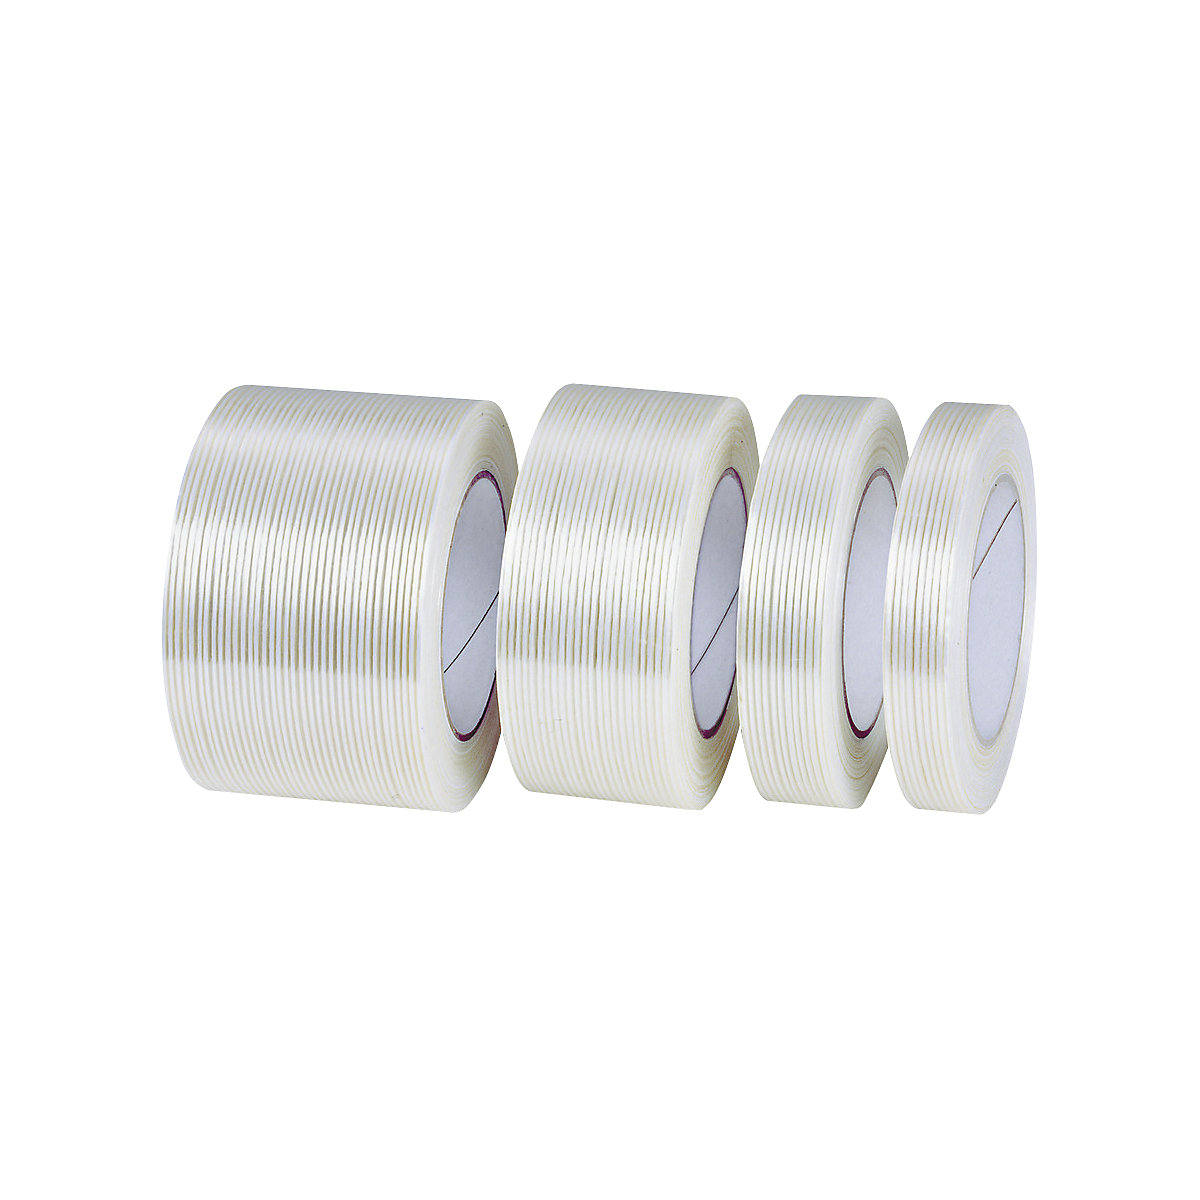 Filamentband, glasfaserverstärkt, VE 6 Rollen, transparent, Bandbreite 25 mm, ab 18 VE-1